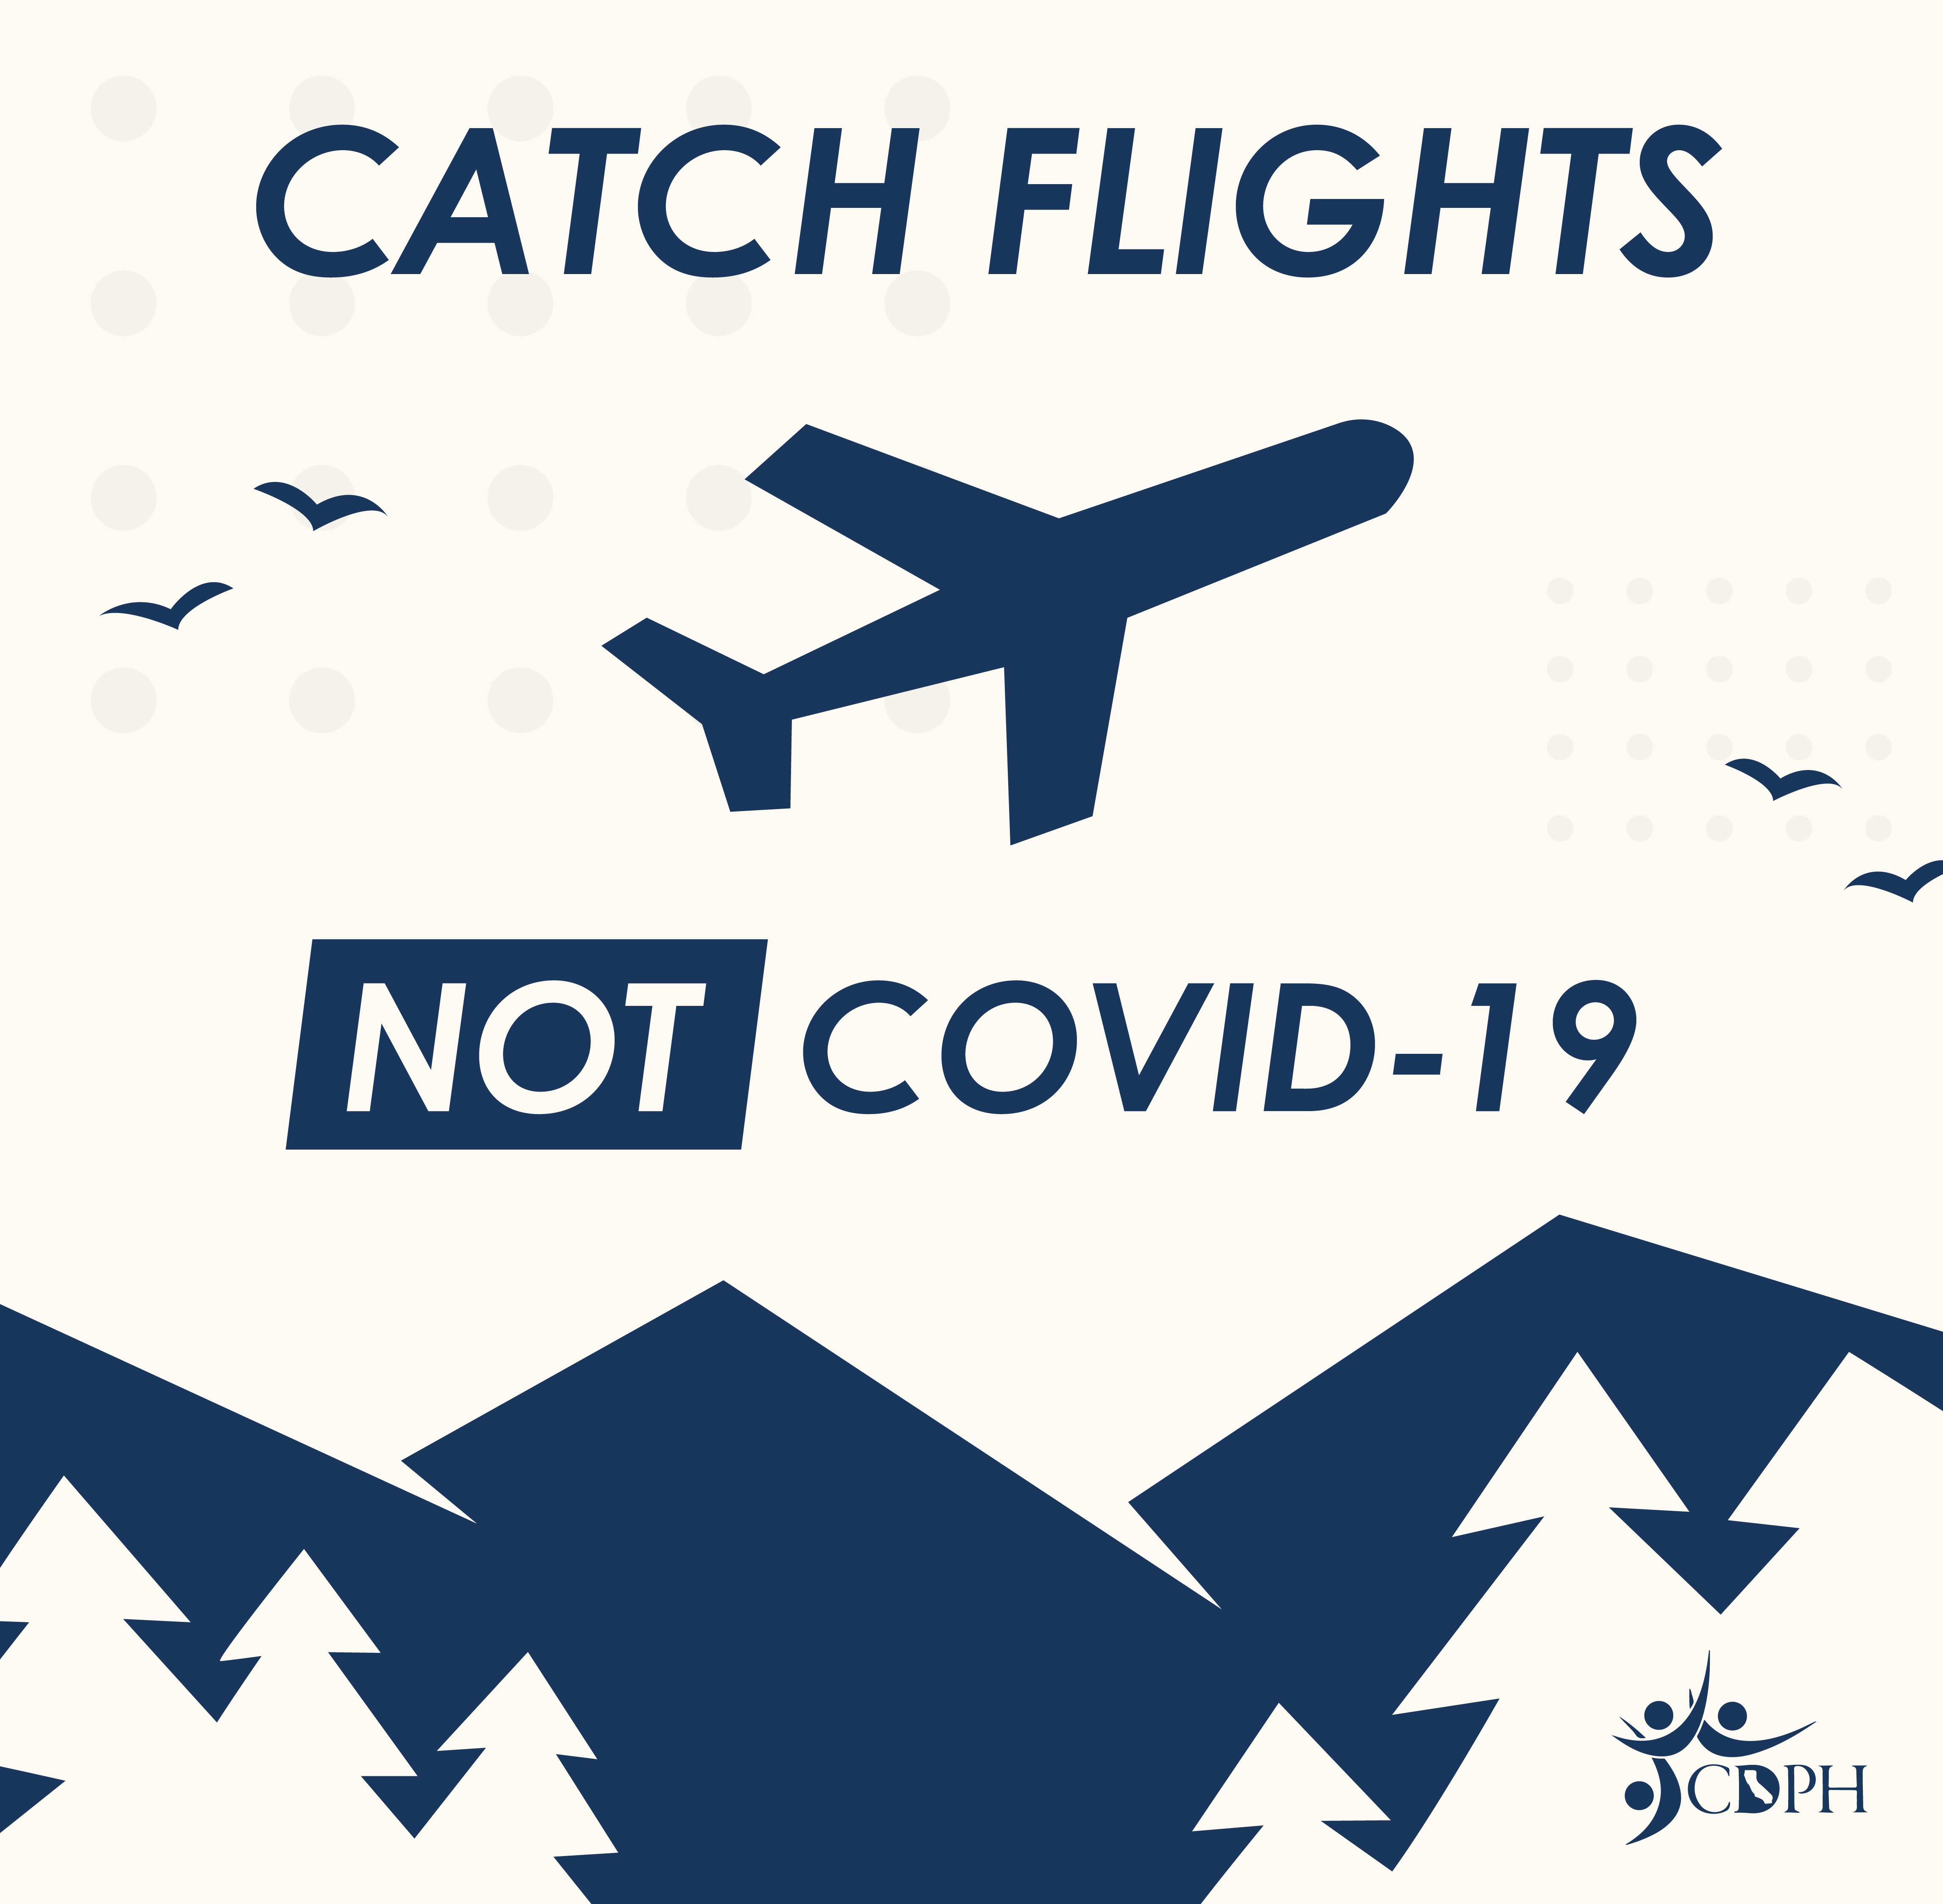 Catch flights not COVID-19